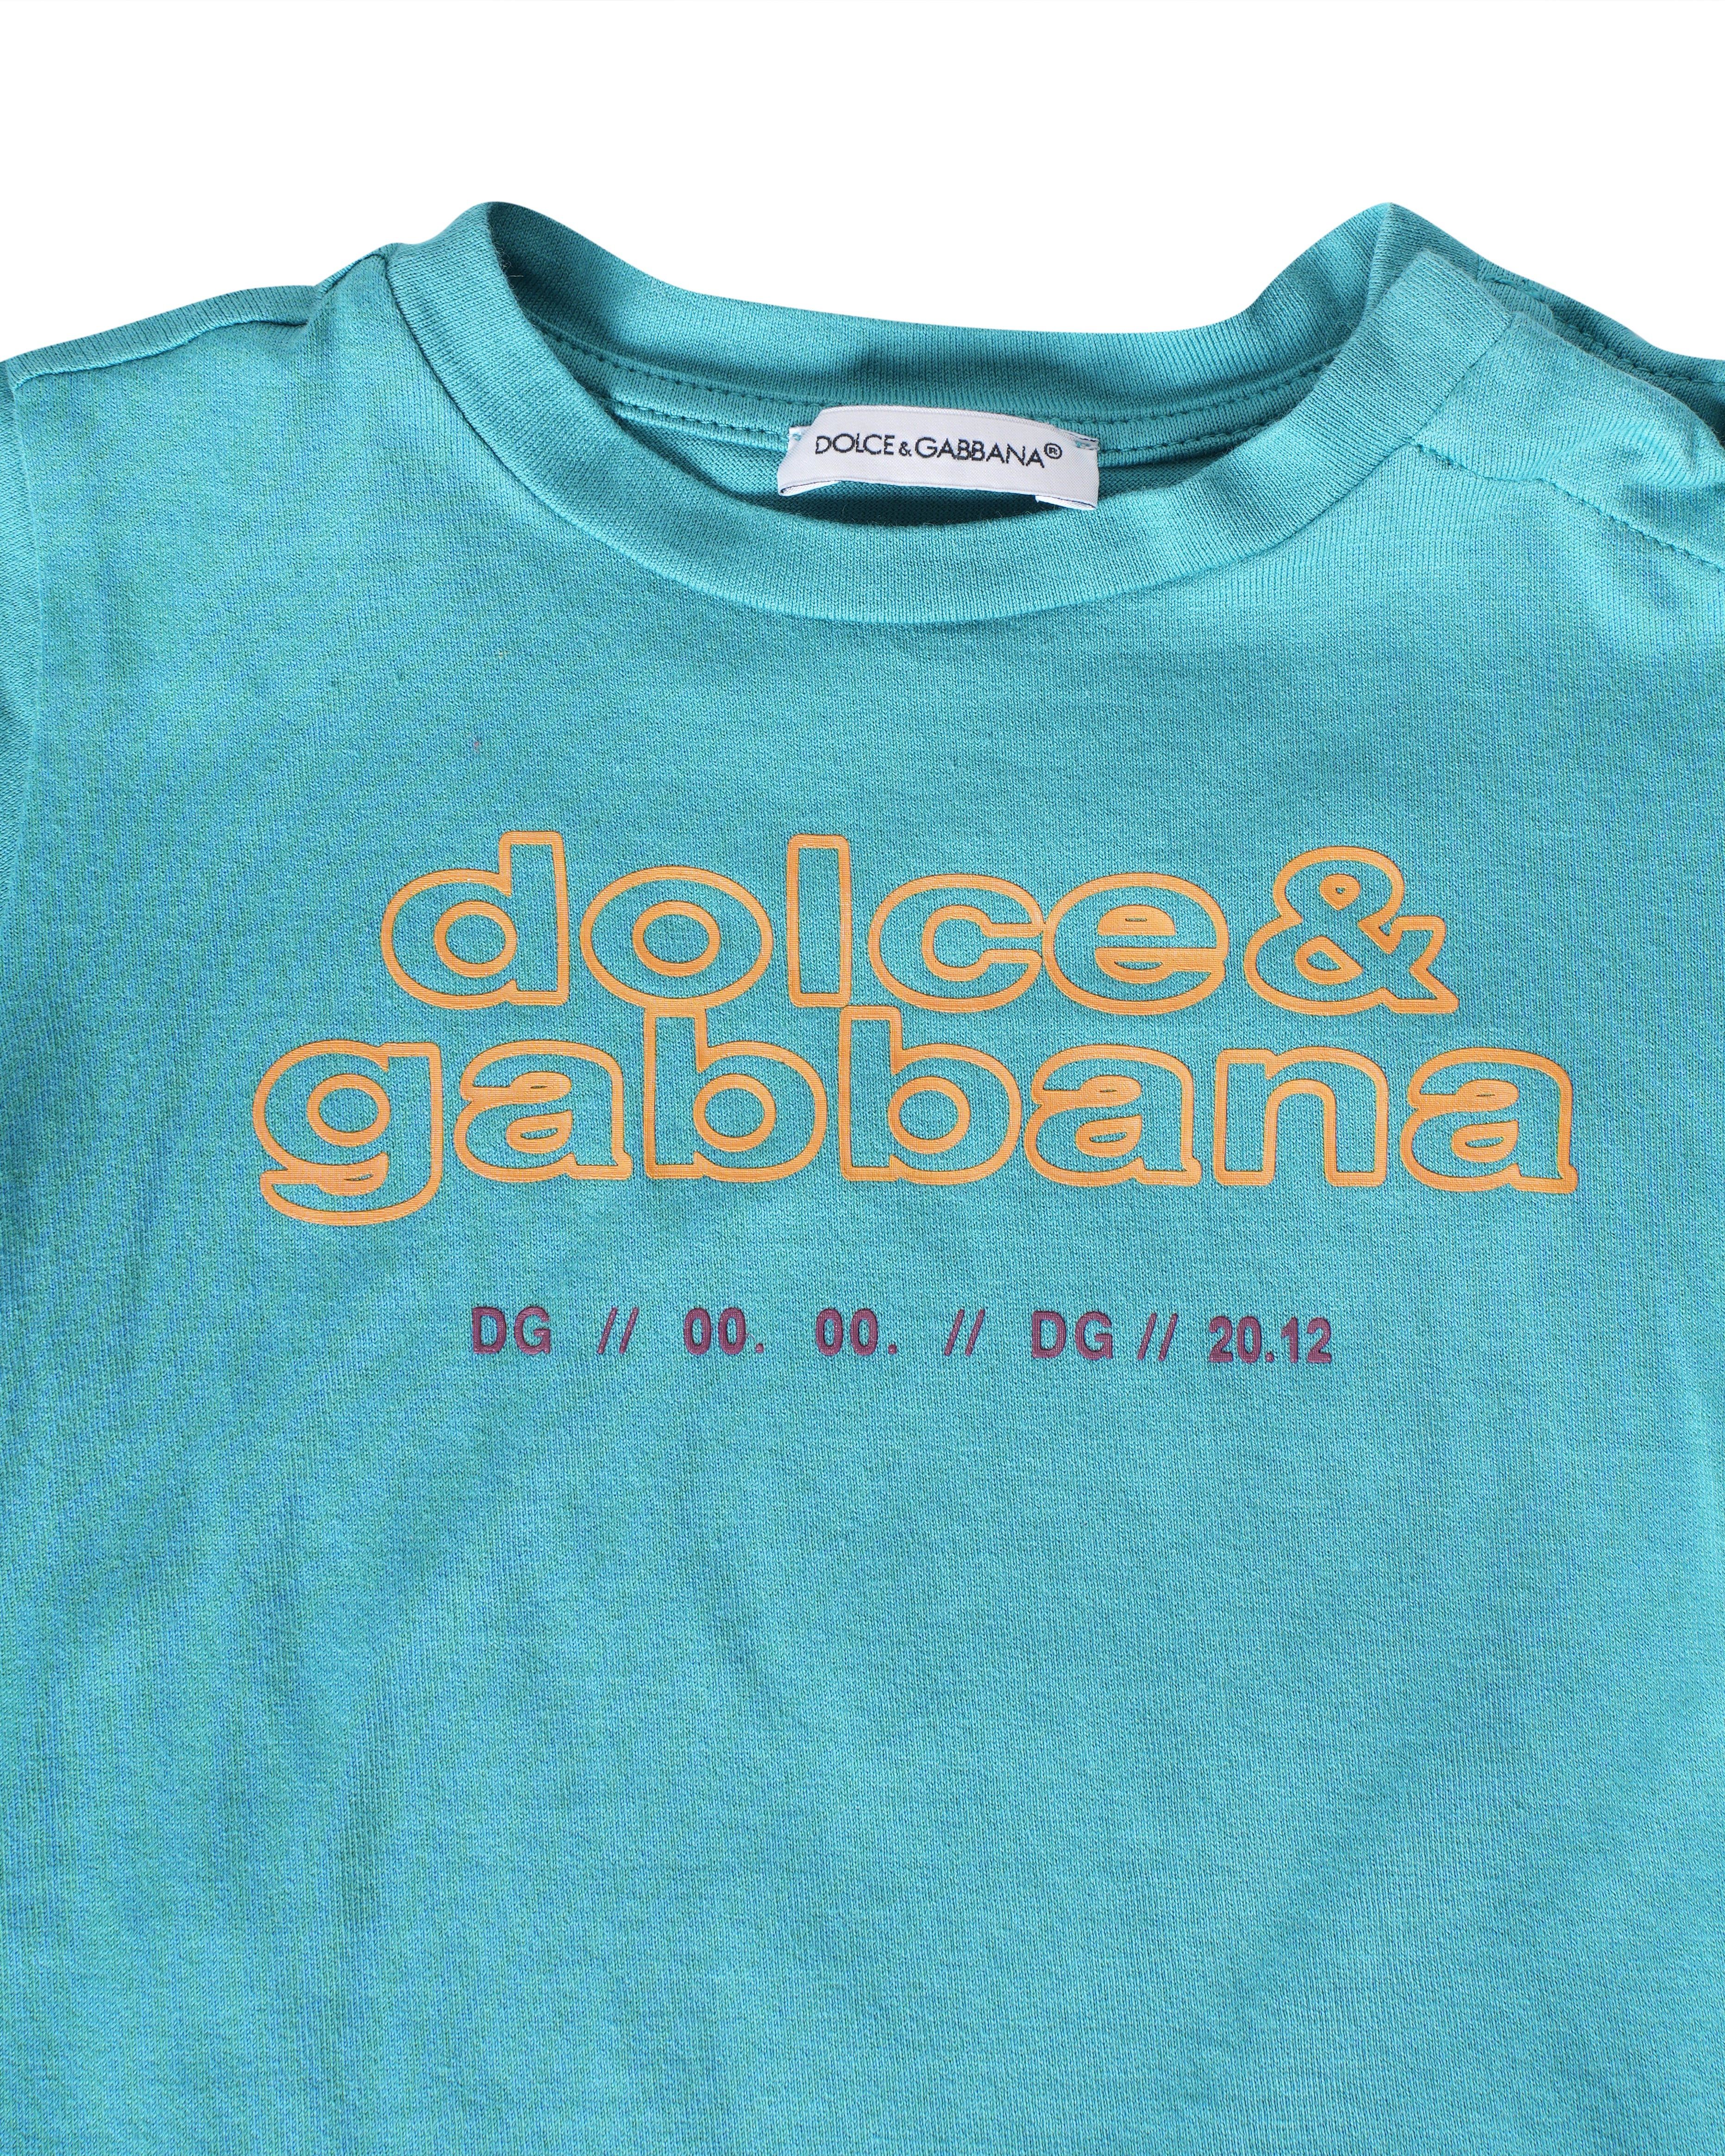 Dolce & Gabbana Center Logo Torquoise T-Shirt